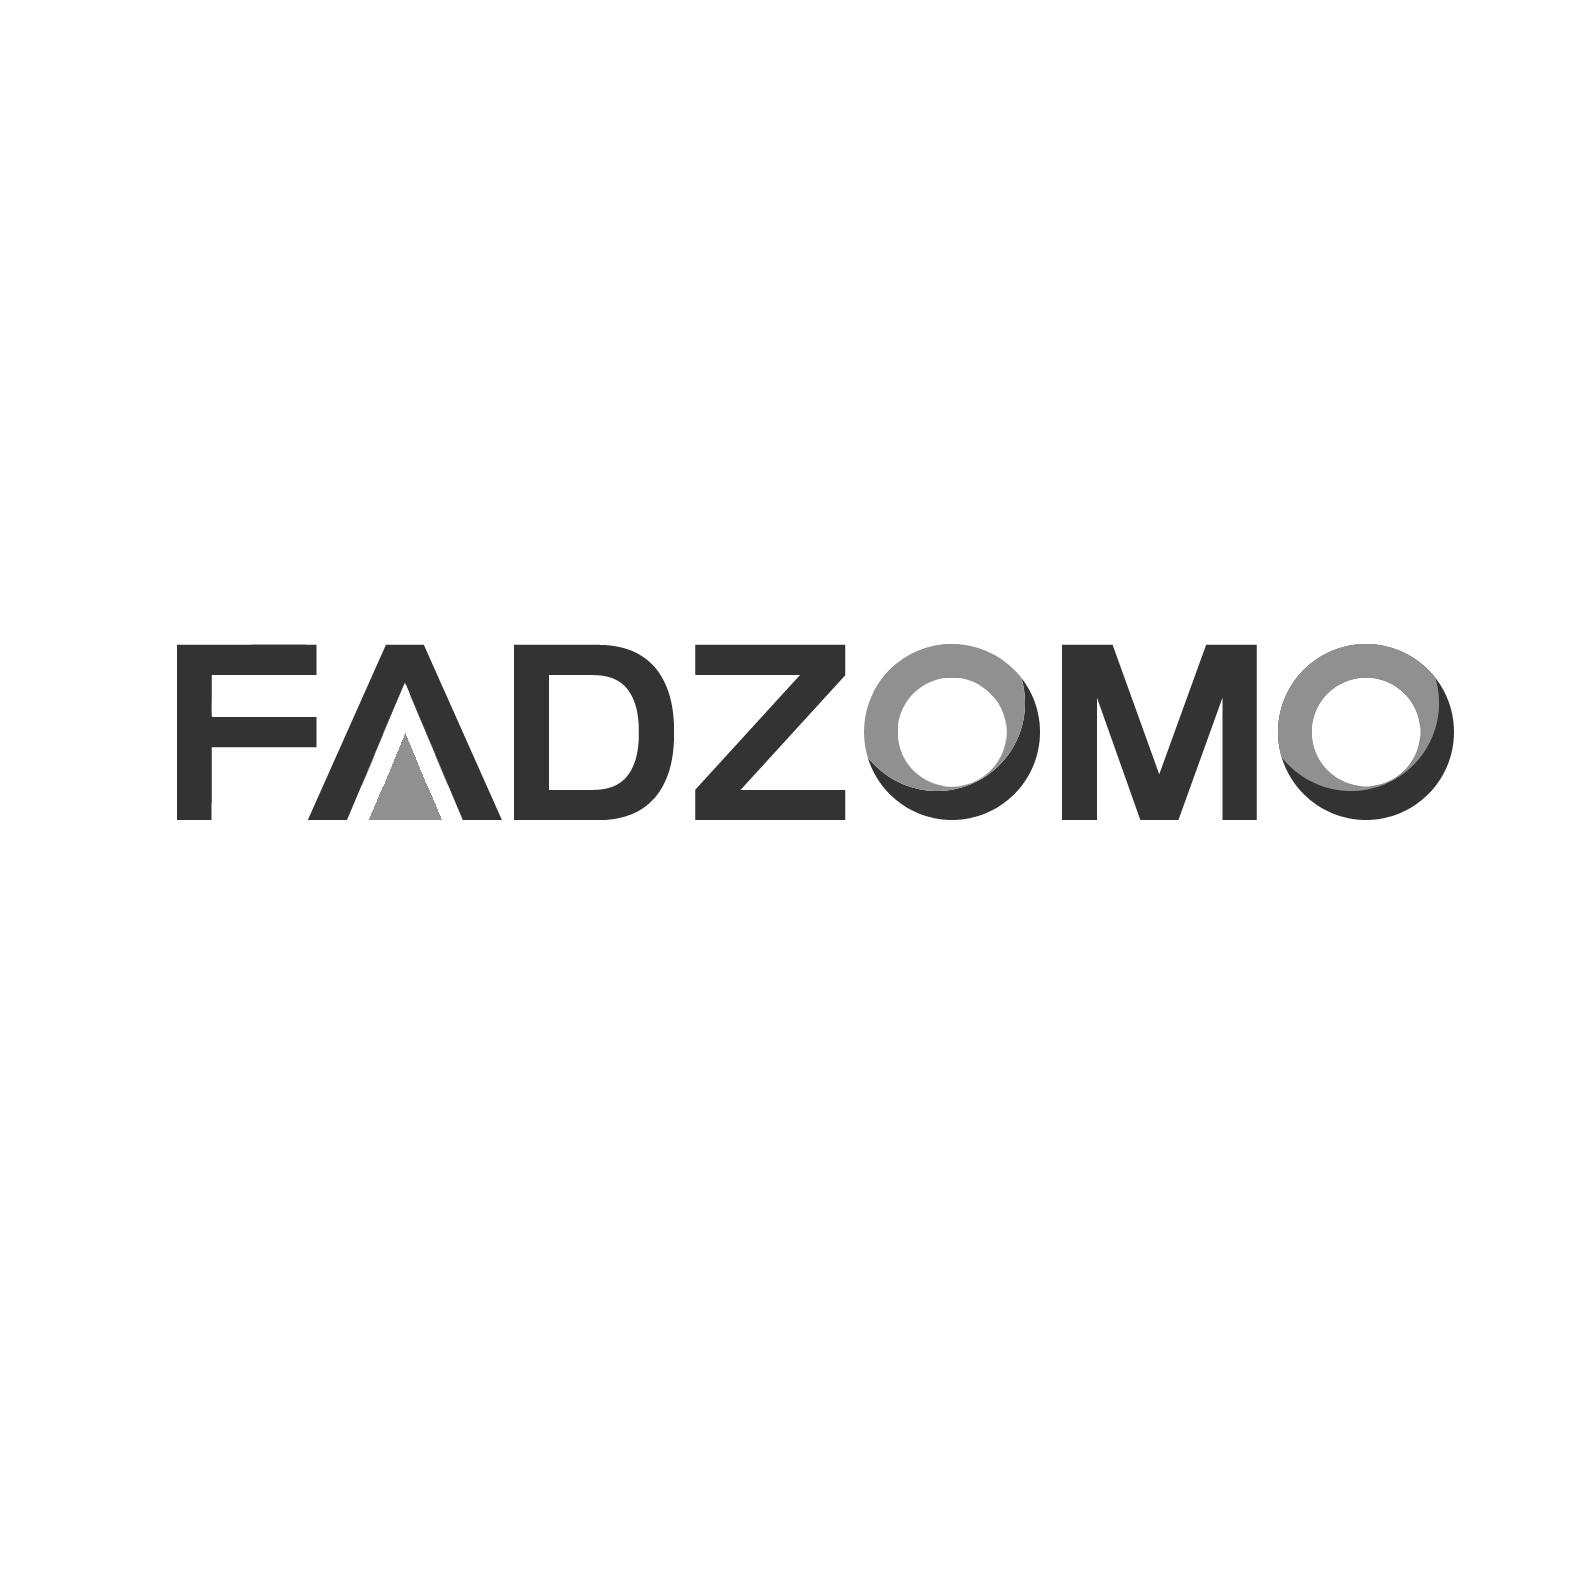 FADZOMO商标转让